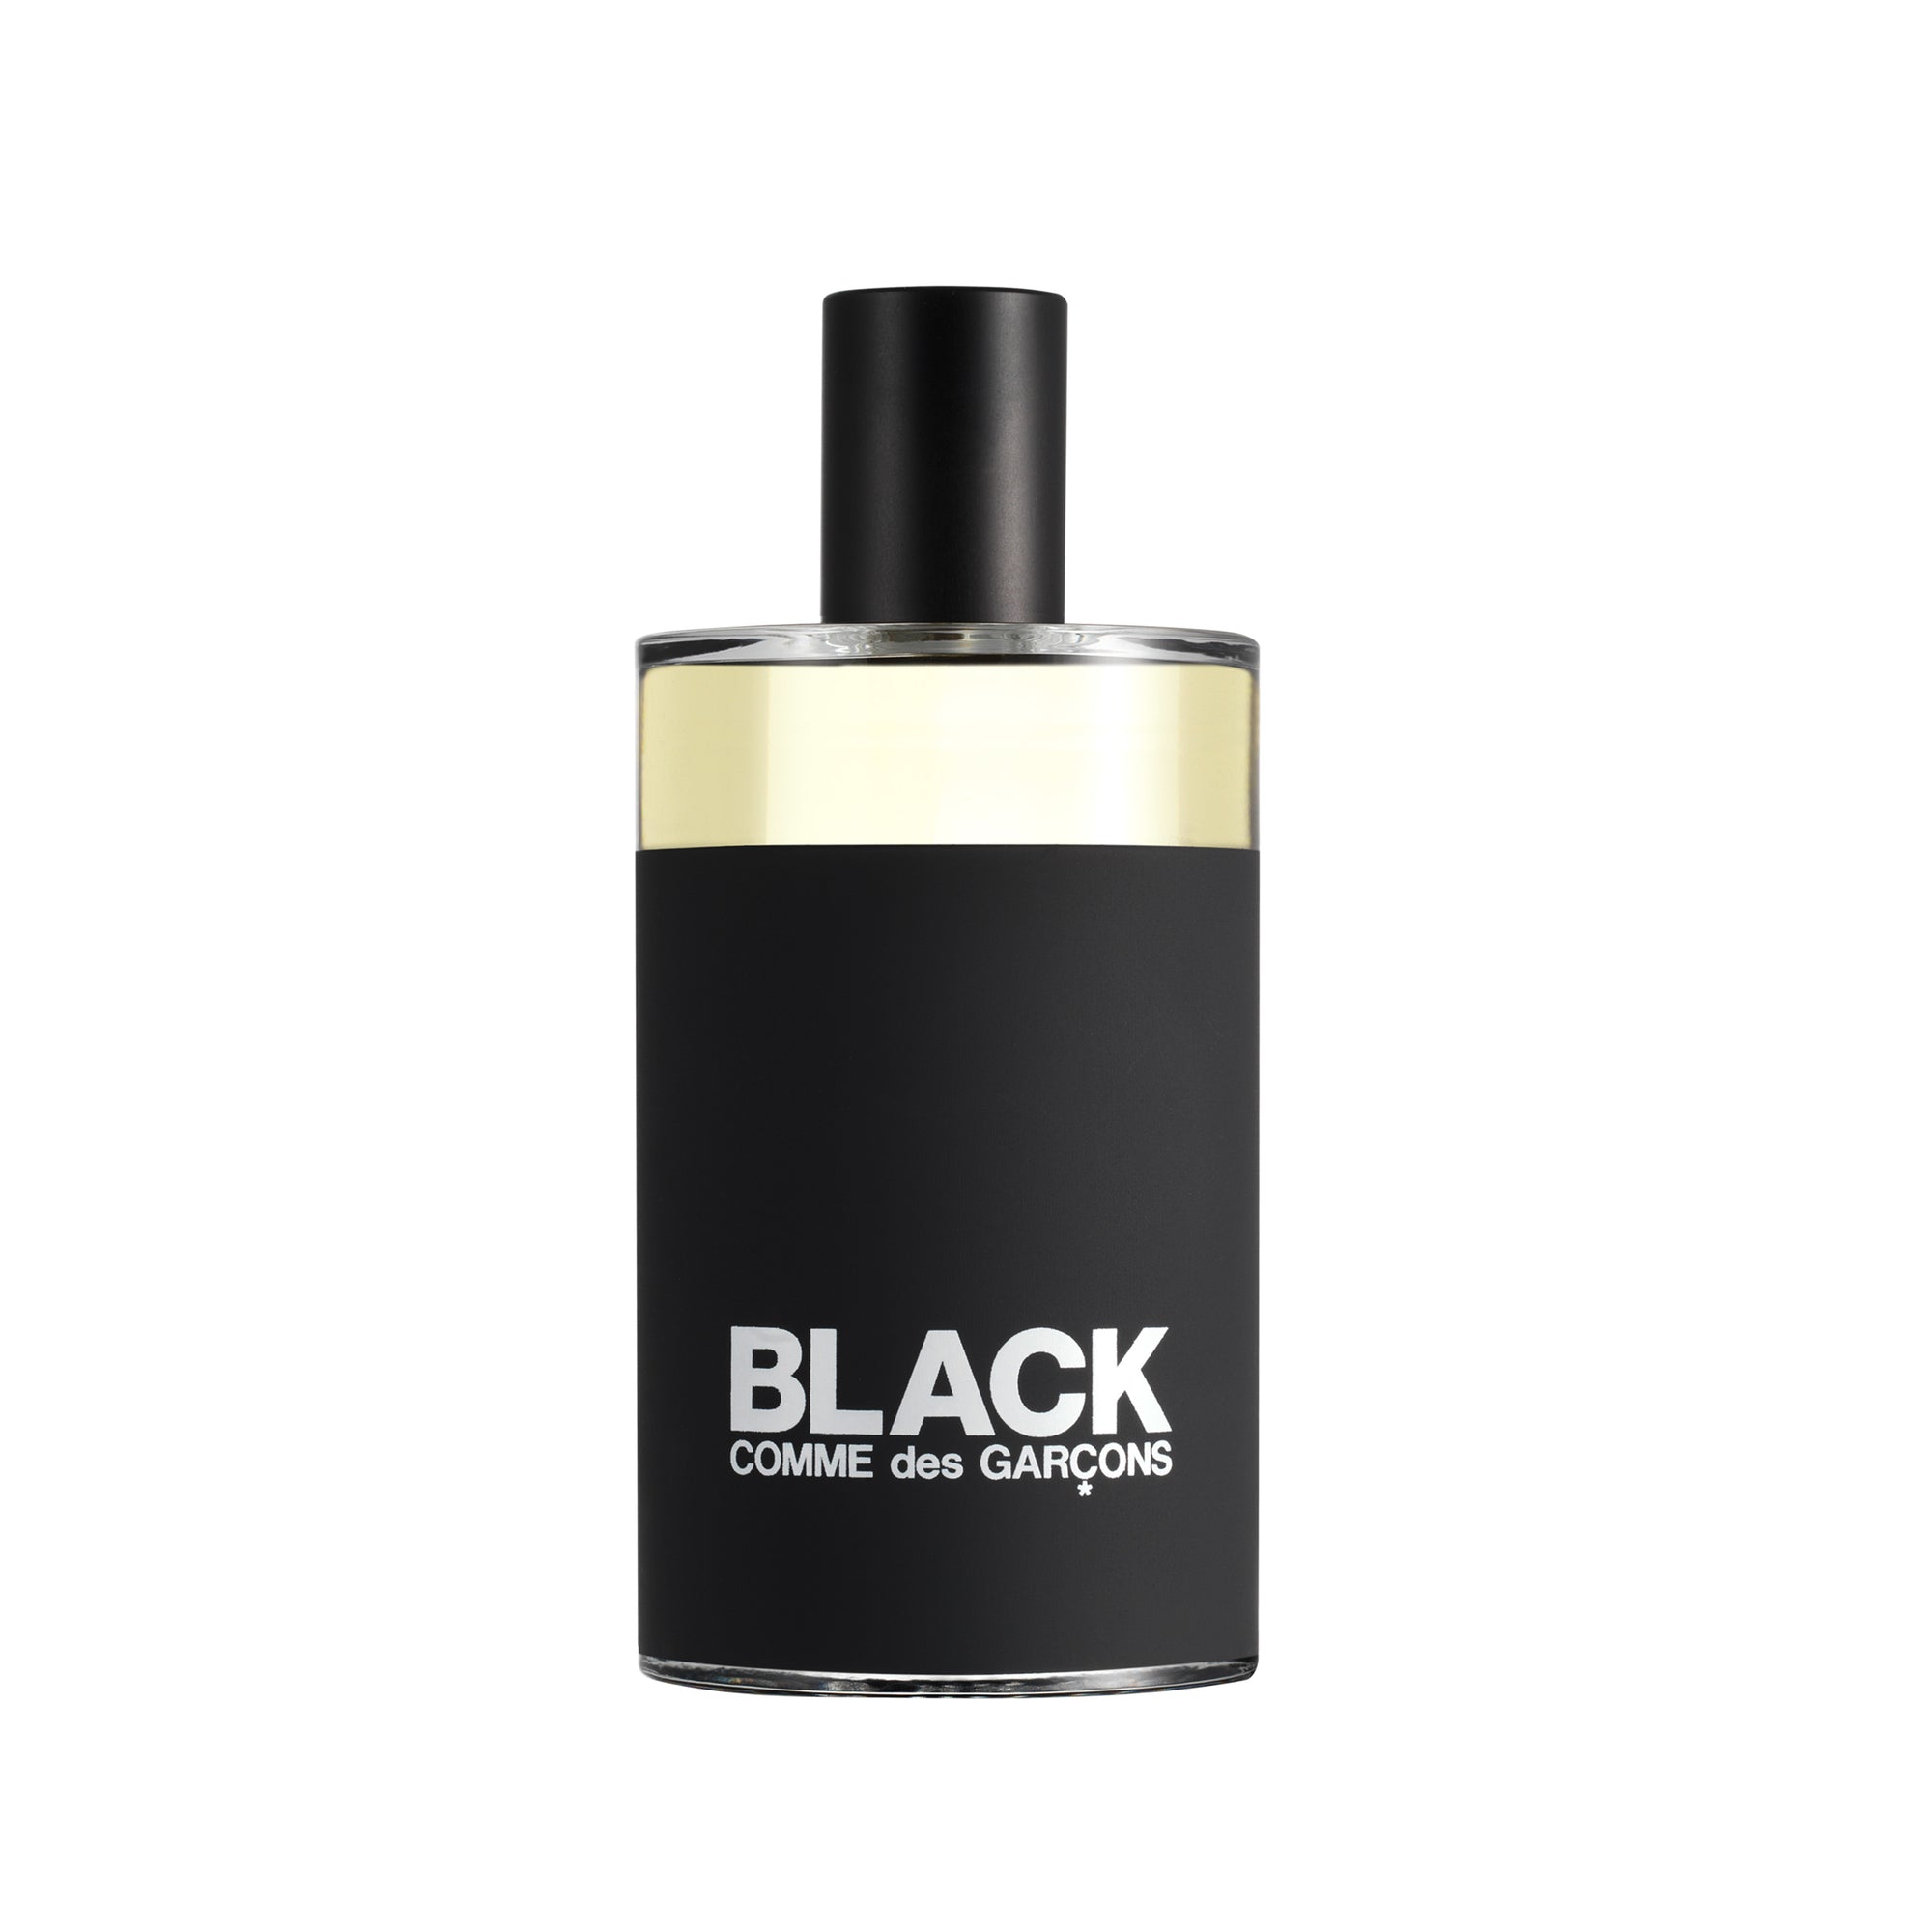 CDG Parfum - BLACK Comme des Garçons - 100ml natural spray view 1